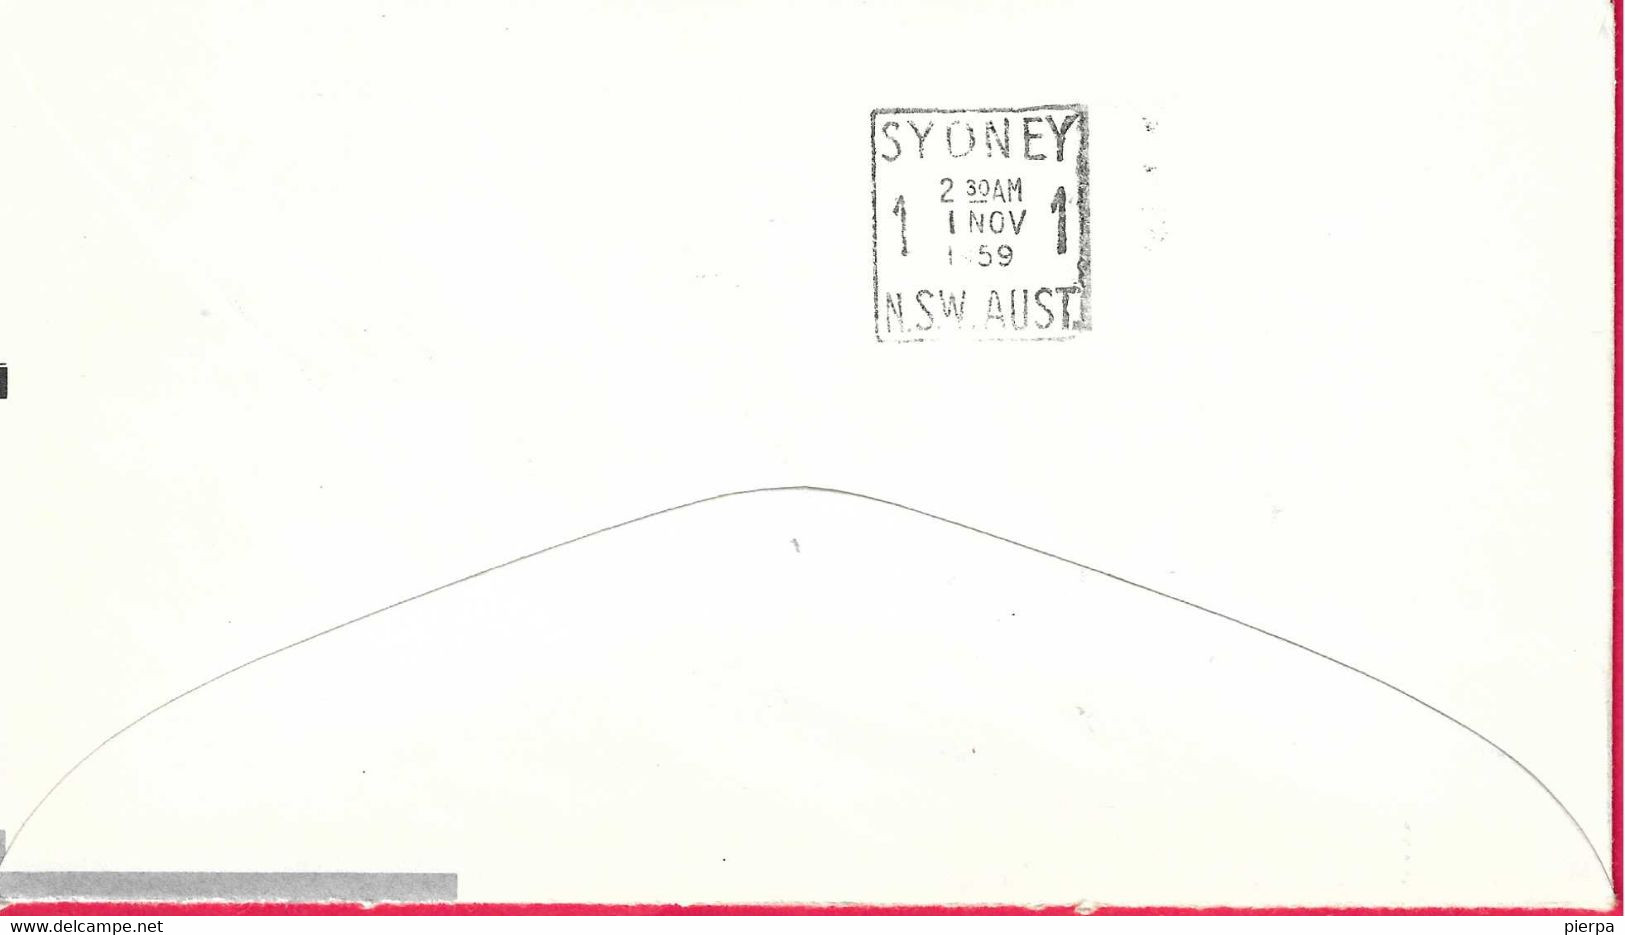 AUSTRALIA - FIRST JET FLIGHT QANTAS ON B.707 FROM KARACHI TO SYDNEY *30.10.1959 *ON OFFICIAL ENVELOPE - Primi Voli